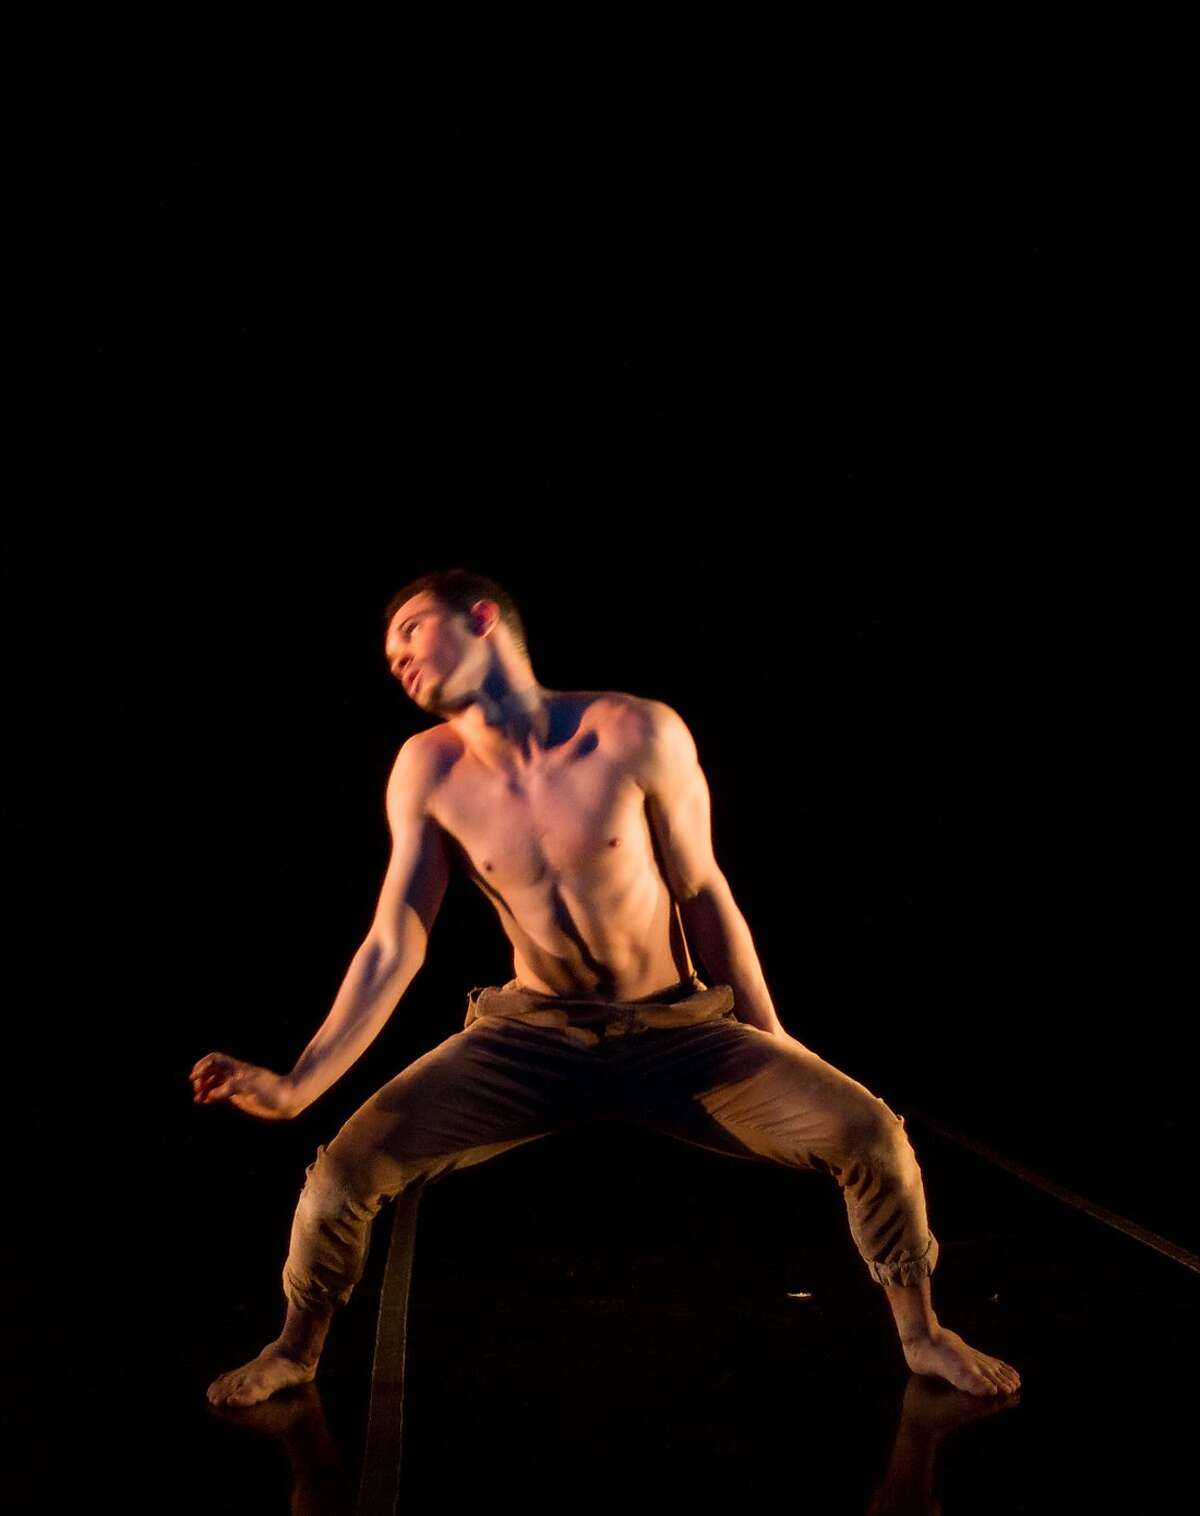 Giordan Cruz in a previous performance of "The Journey Part 3," created by emerging Bay Area choreographer Dazaun Soleyn. Photo: Alan Kimara Dixon